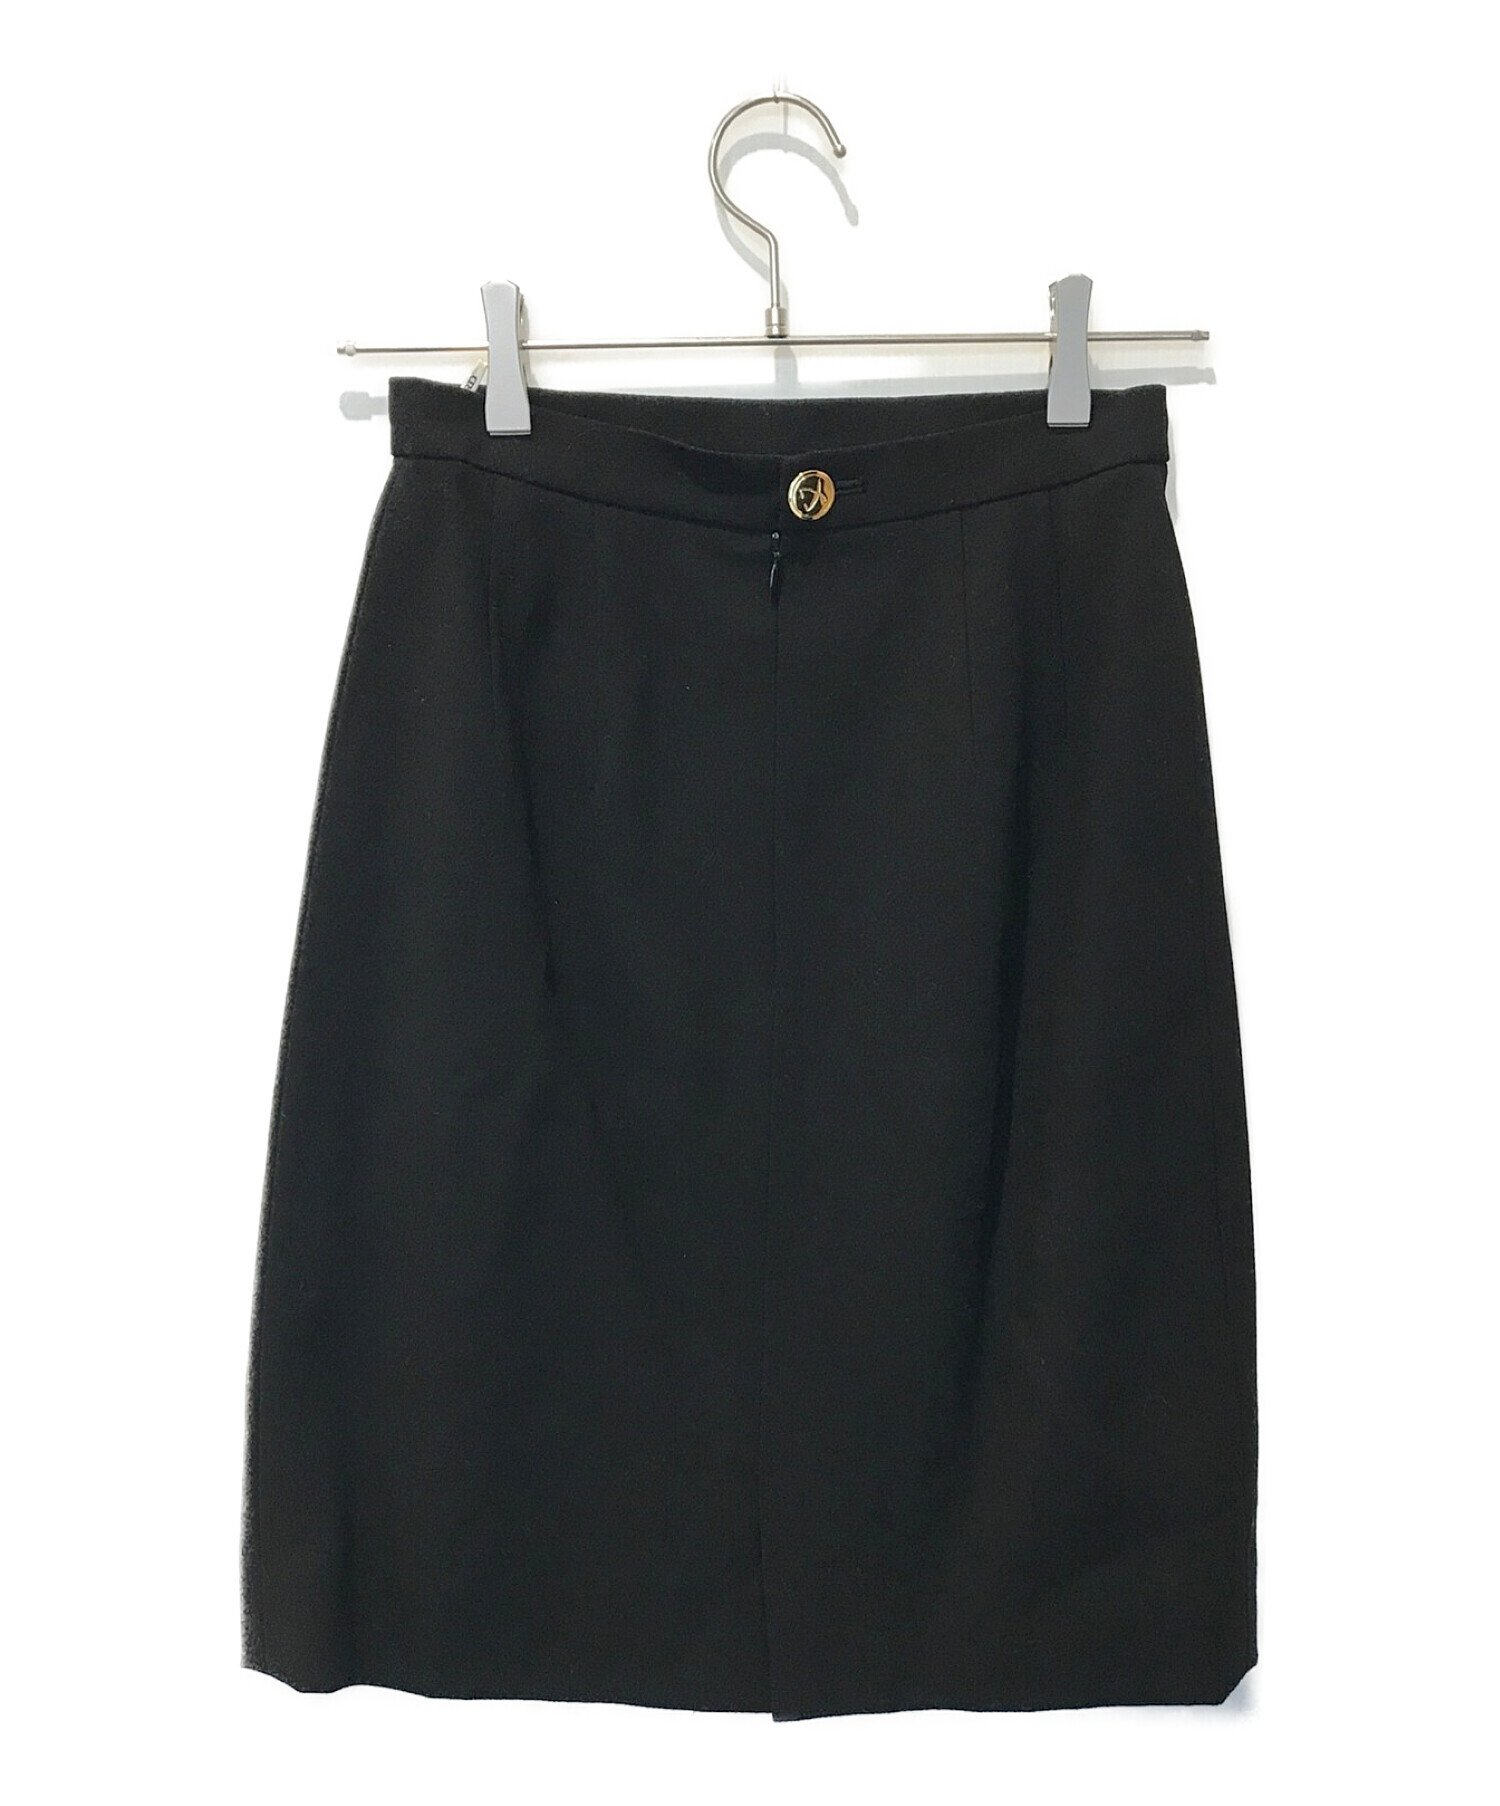 LEONARD (レオナール) スカート ブラック サイズ:サイズ表記無し